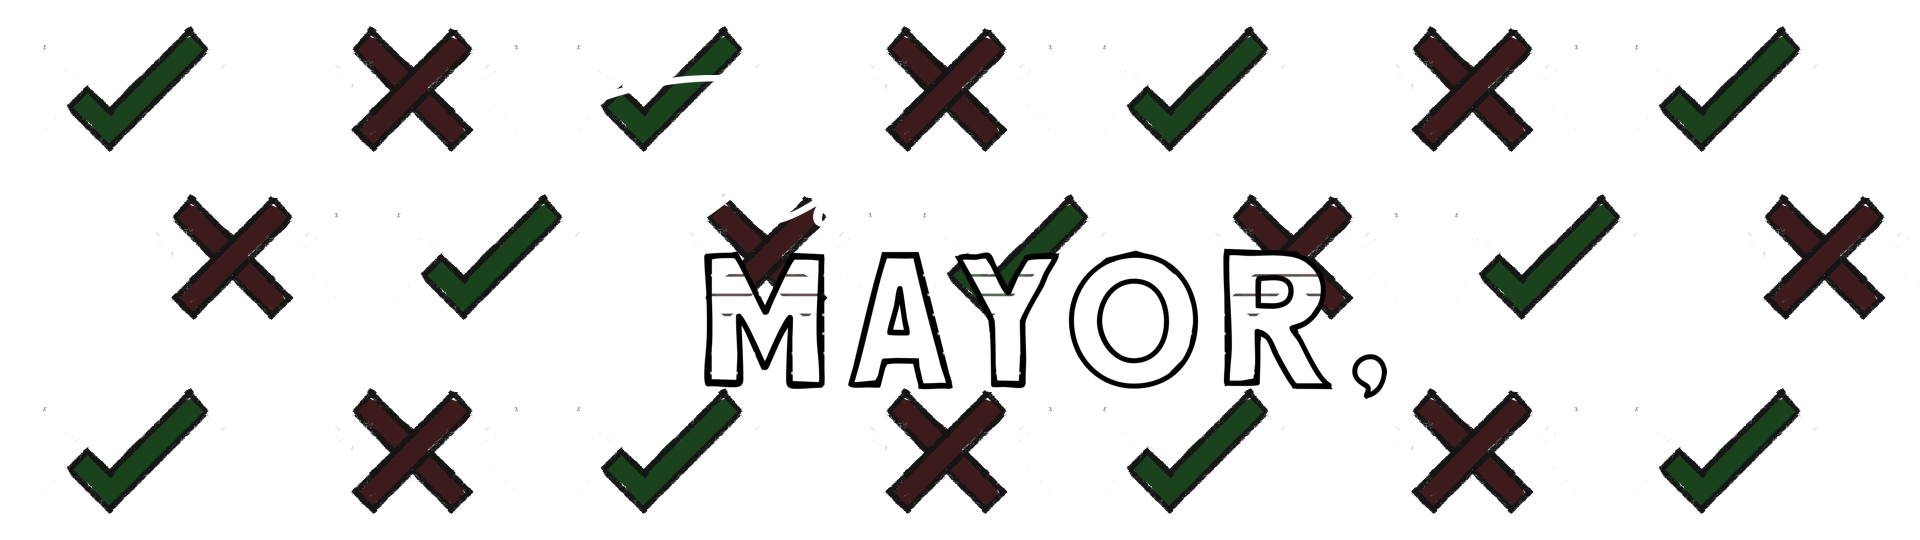 Dear Mayor,